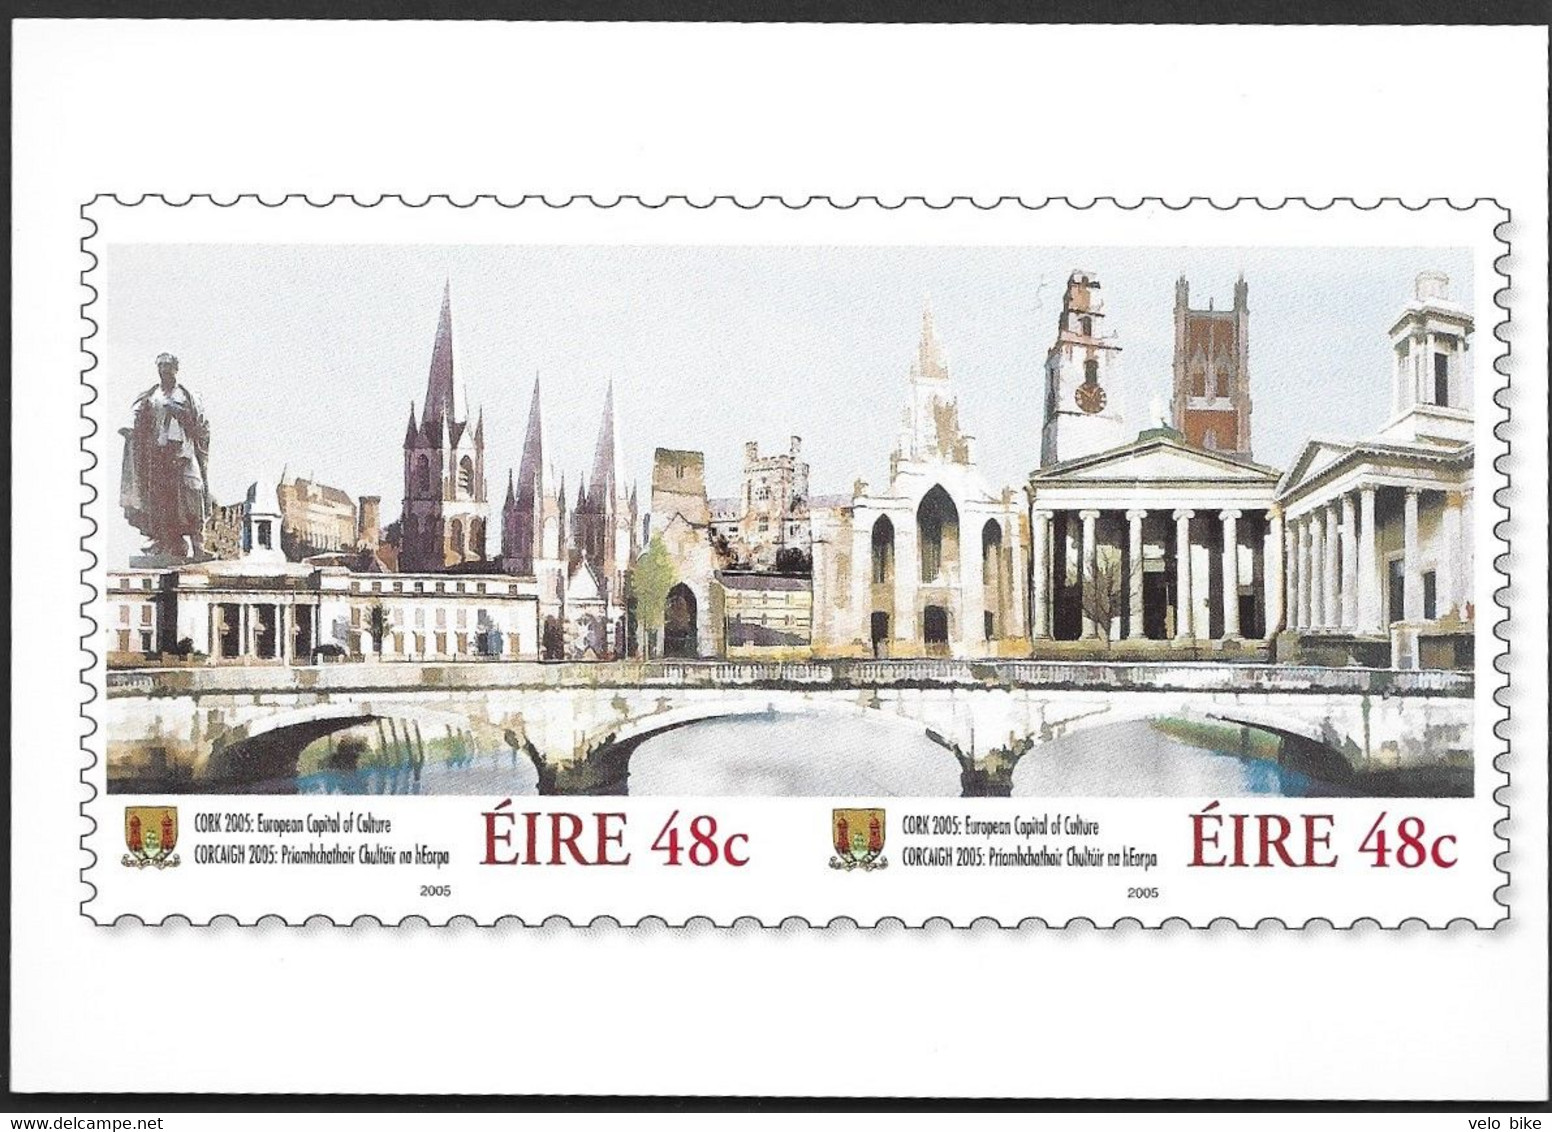 Eire Ireland Postal Stationery Postage Paid Cork 2005 Art Statue Bridge Church Capitol Of Culture Prioritaire Airmail - Interi Postali